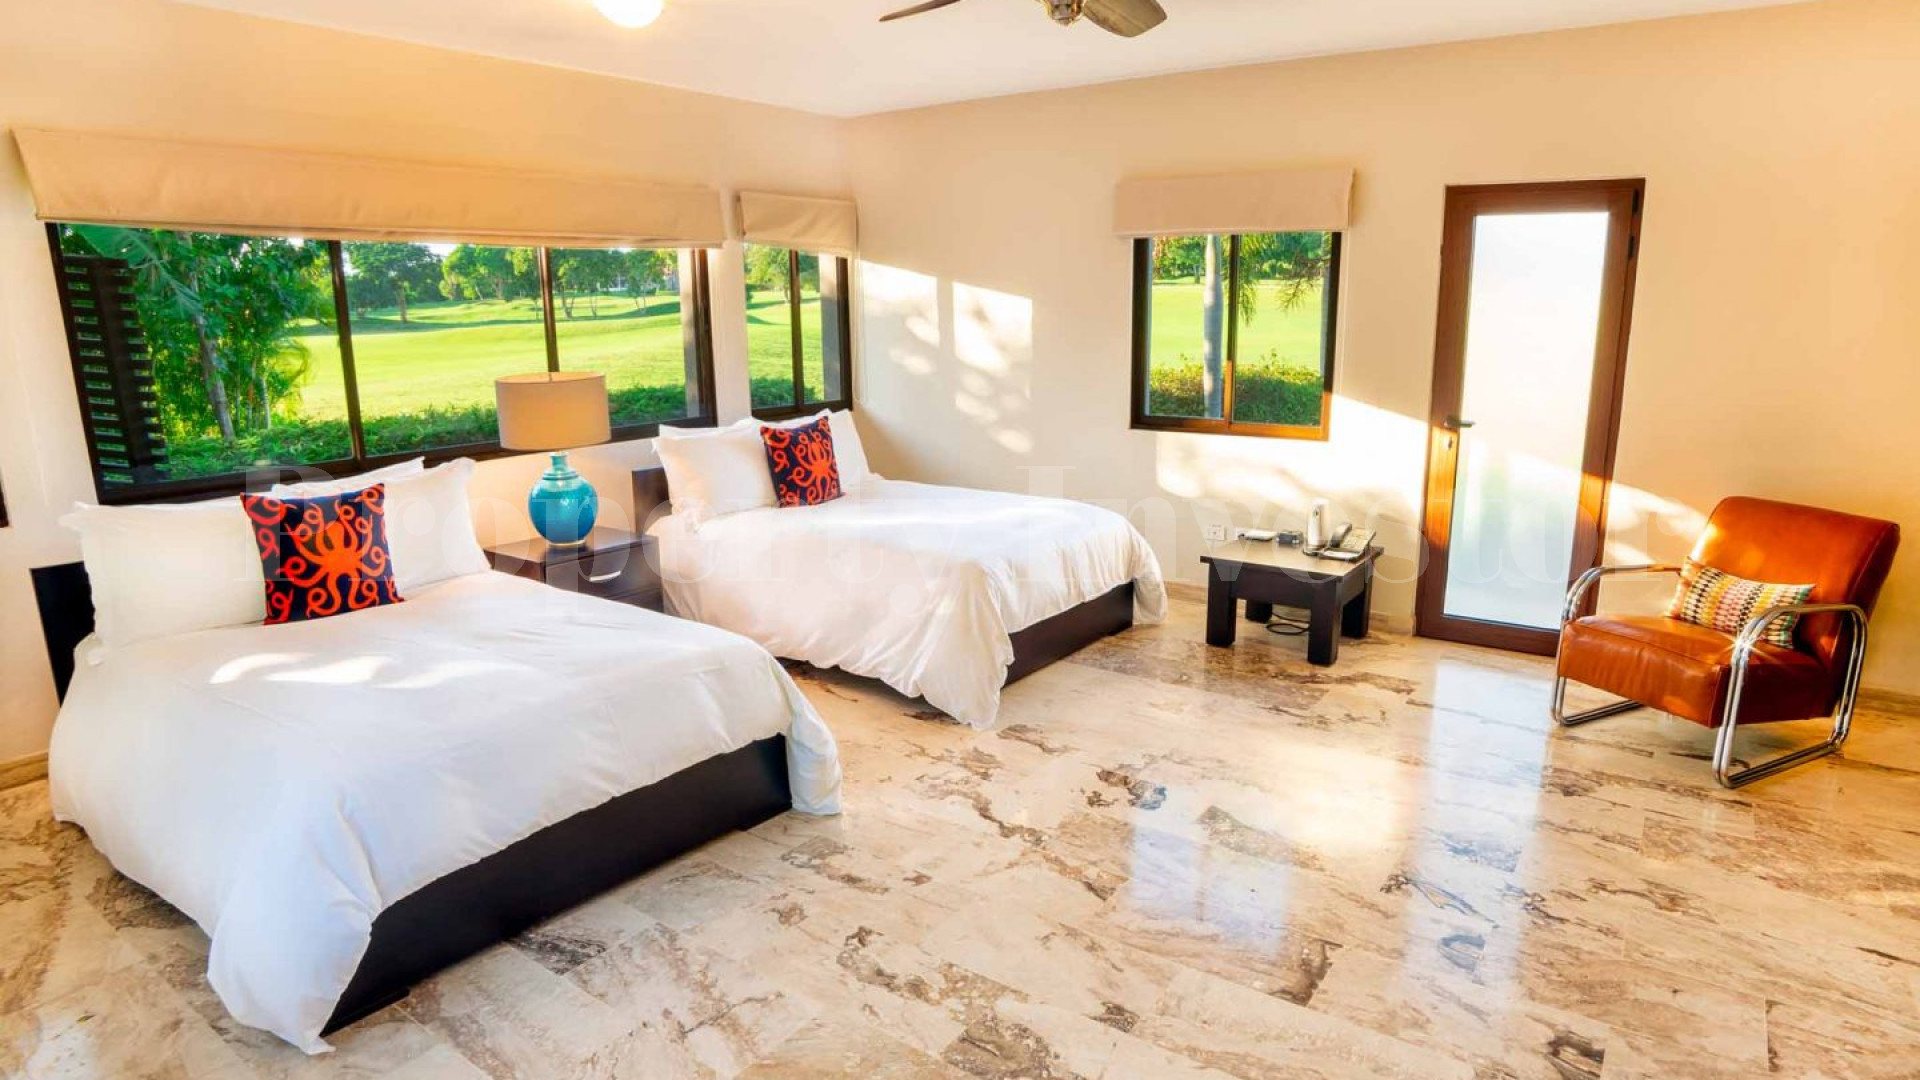 Extravagant 6 Bedroom Luxury Designer Golf Villa for Sale in La Romana, Dominican Republic